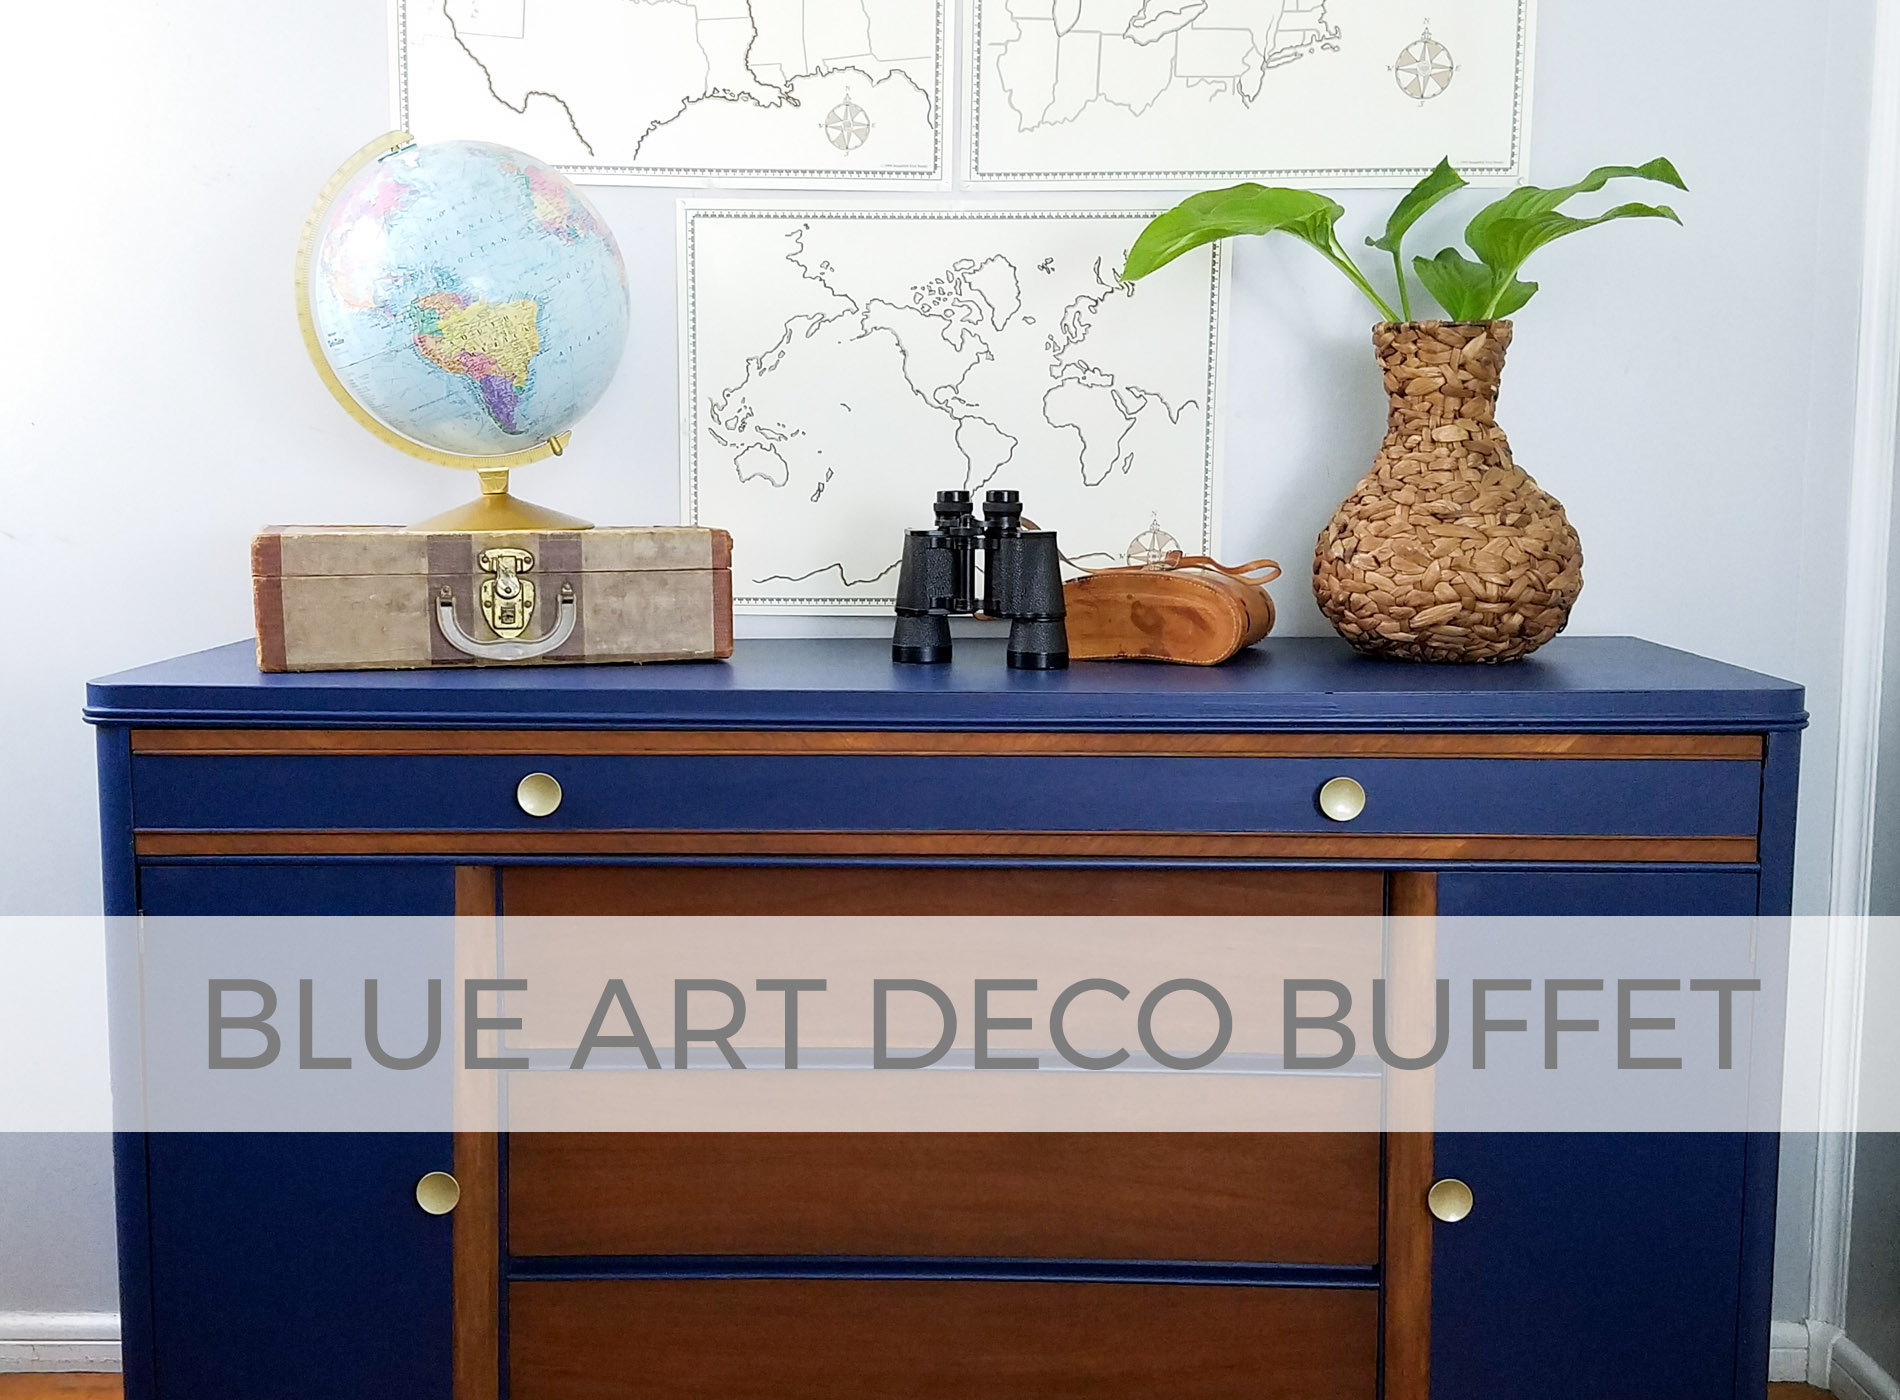 Vintage Art Deco Buffet in Blue by Prodigal Pieces | prodigalpieces.com